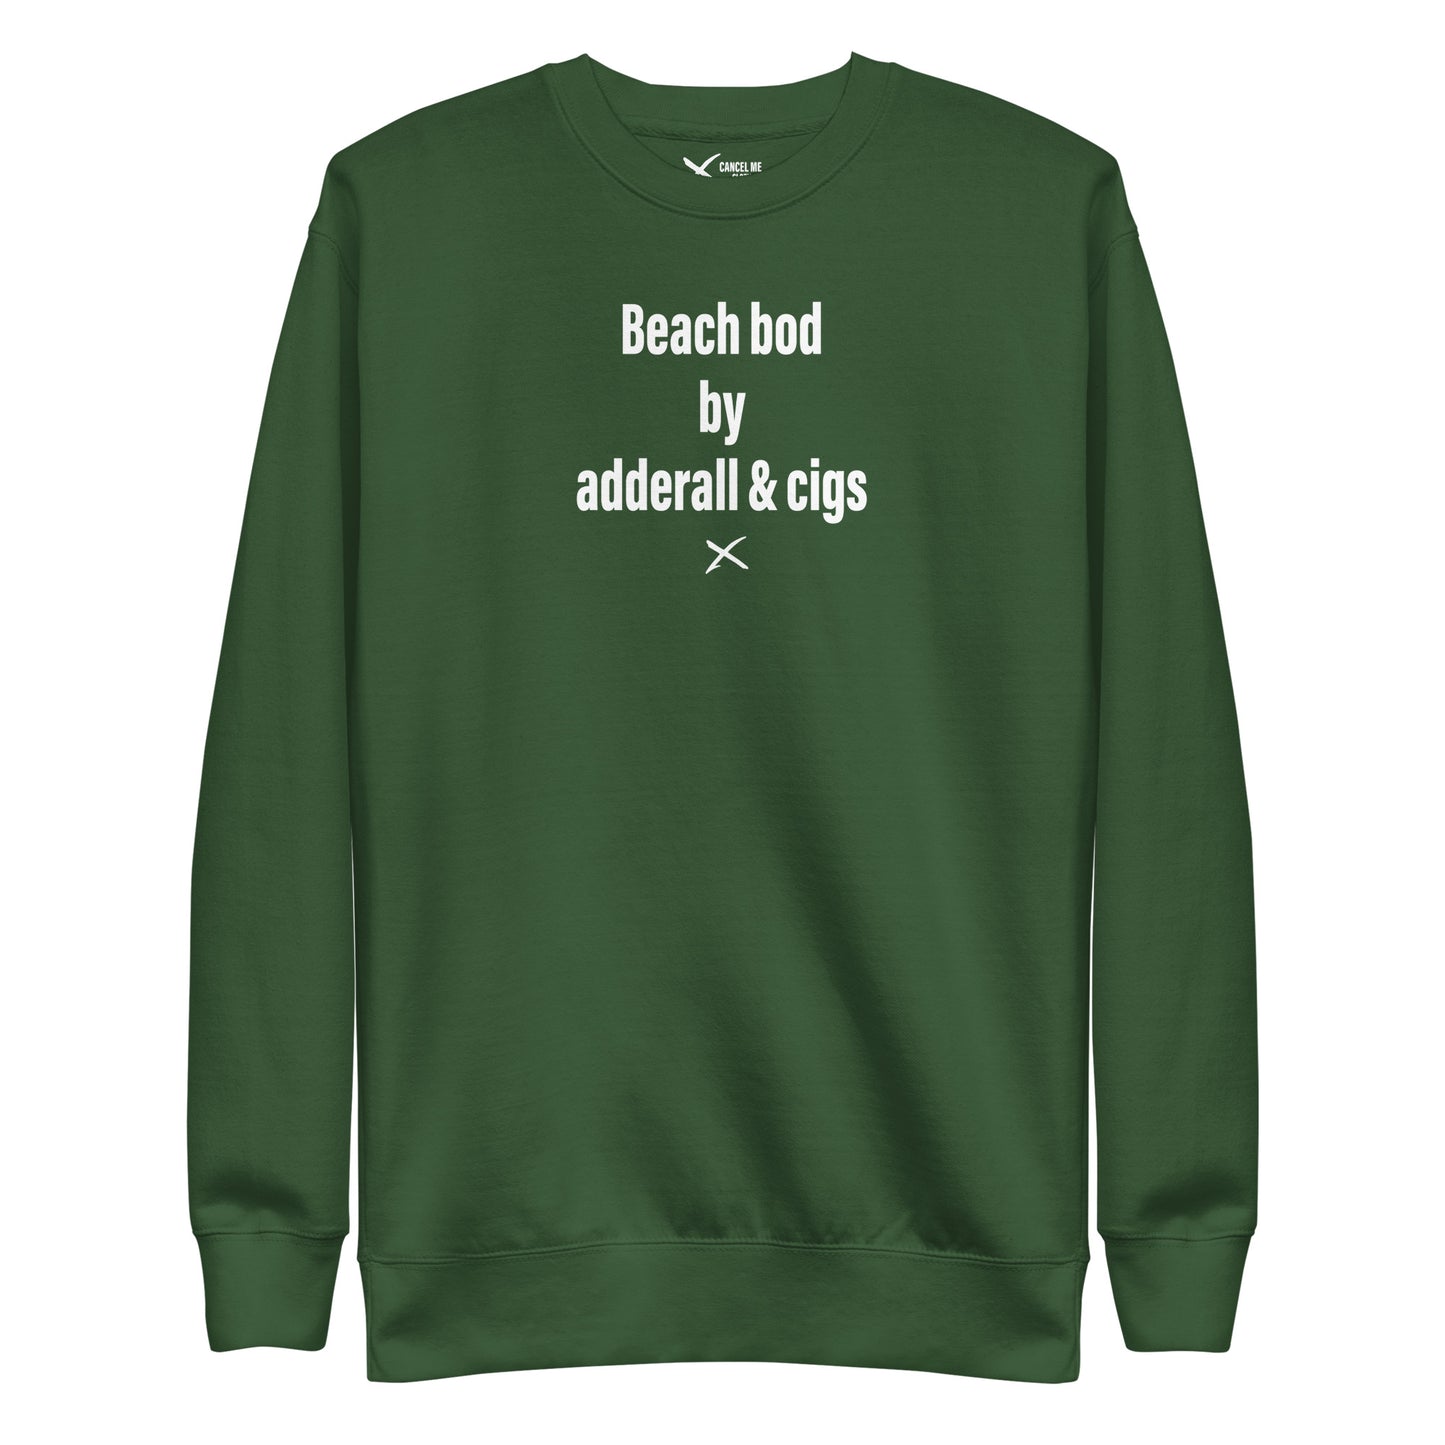 Beach bod by adderall & cigs - Sweatshirt